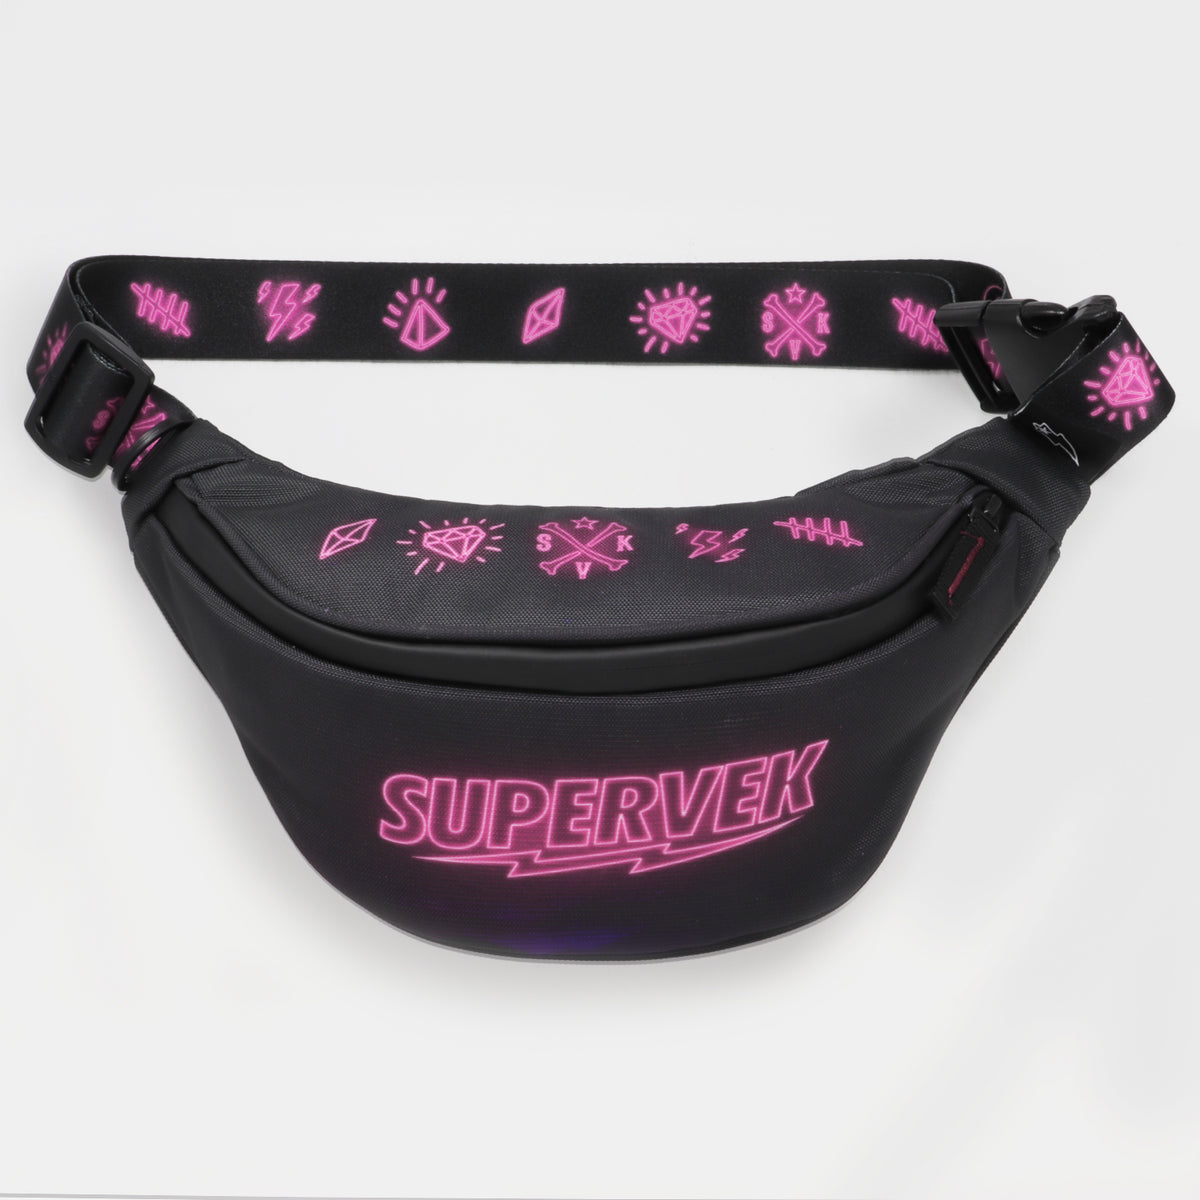 Supervek Crossbody Slinger - Veker - Urban Functional Fanny Hip Bag for Everyday Essentials